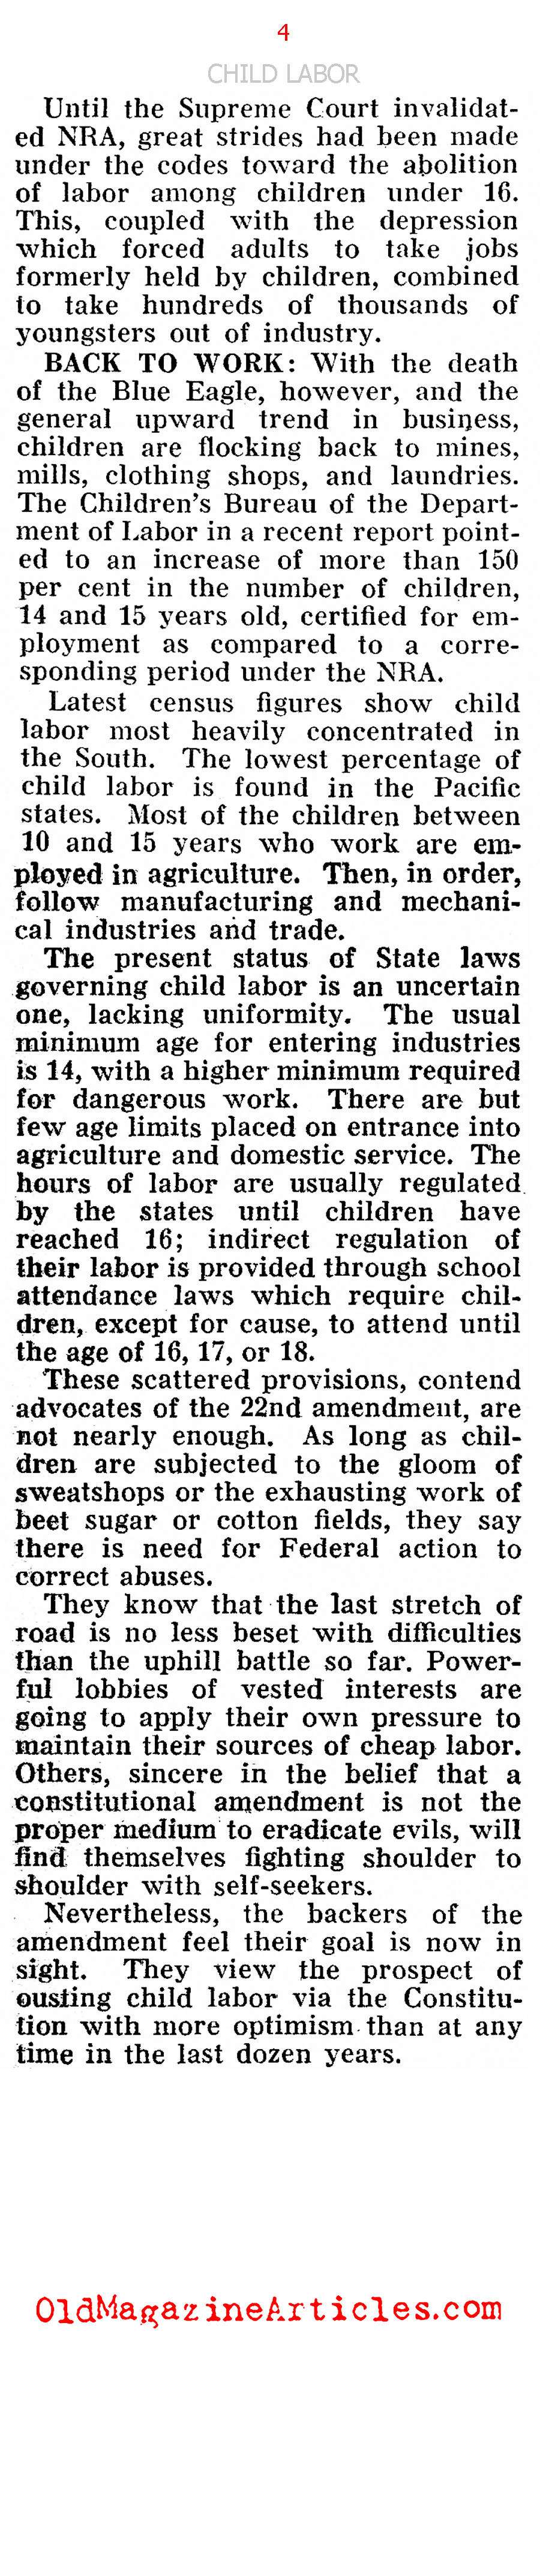 Putting An End To Child Labor (Pathfinder Magazine, 1937)